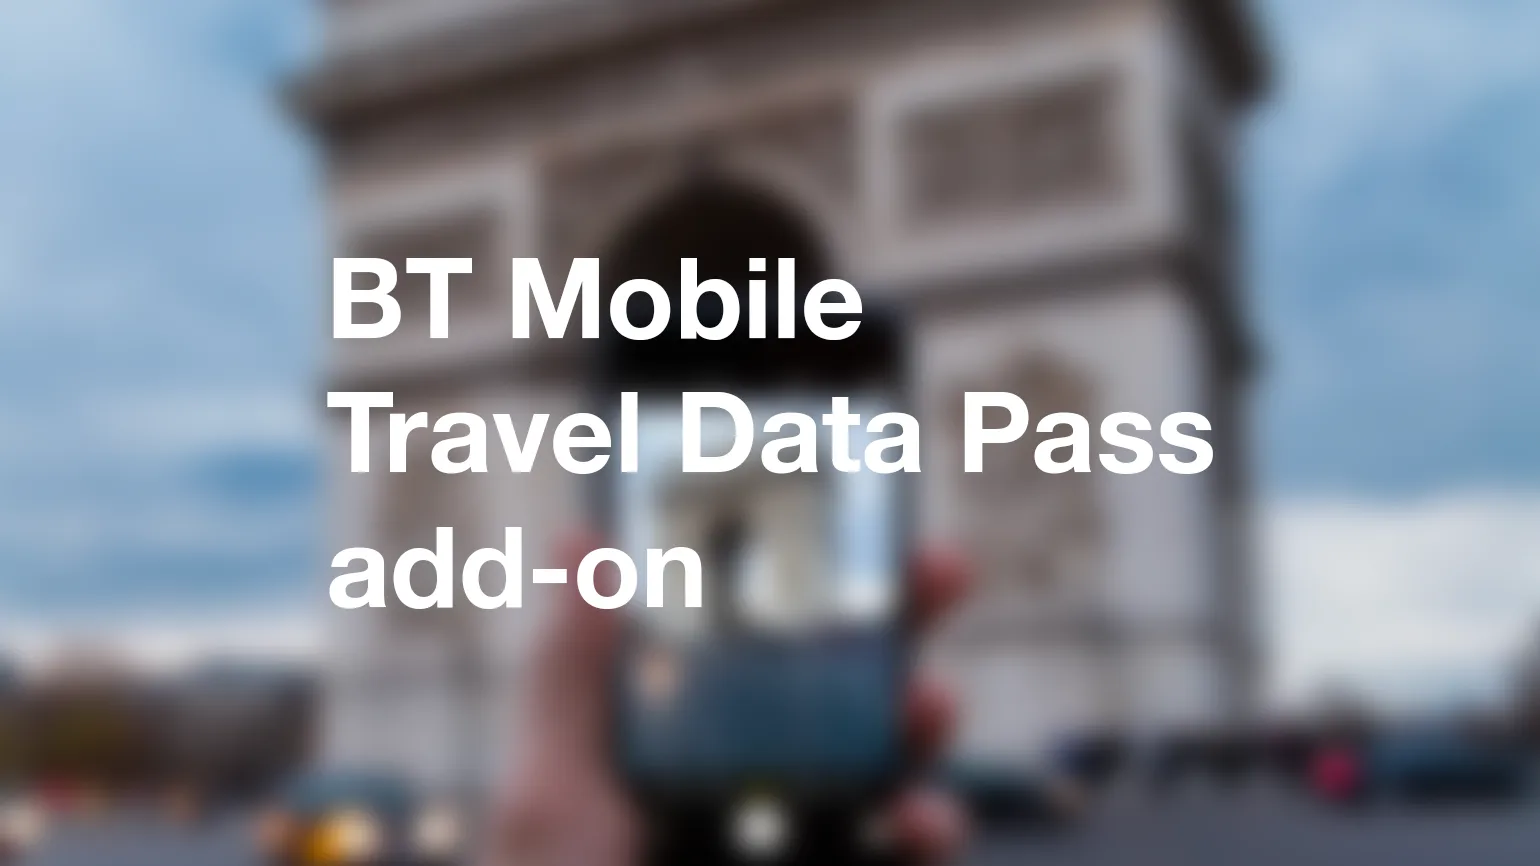 BT Mobile Travel Data Pass add-on